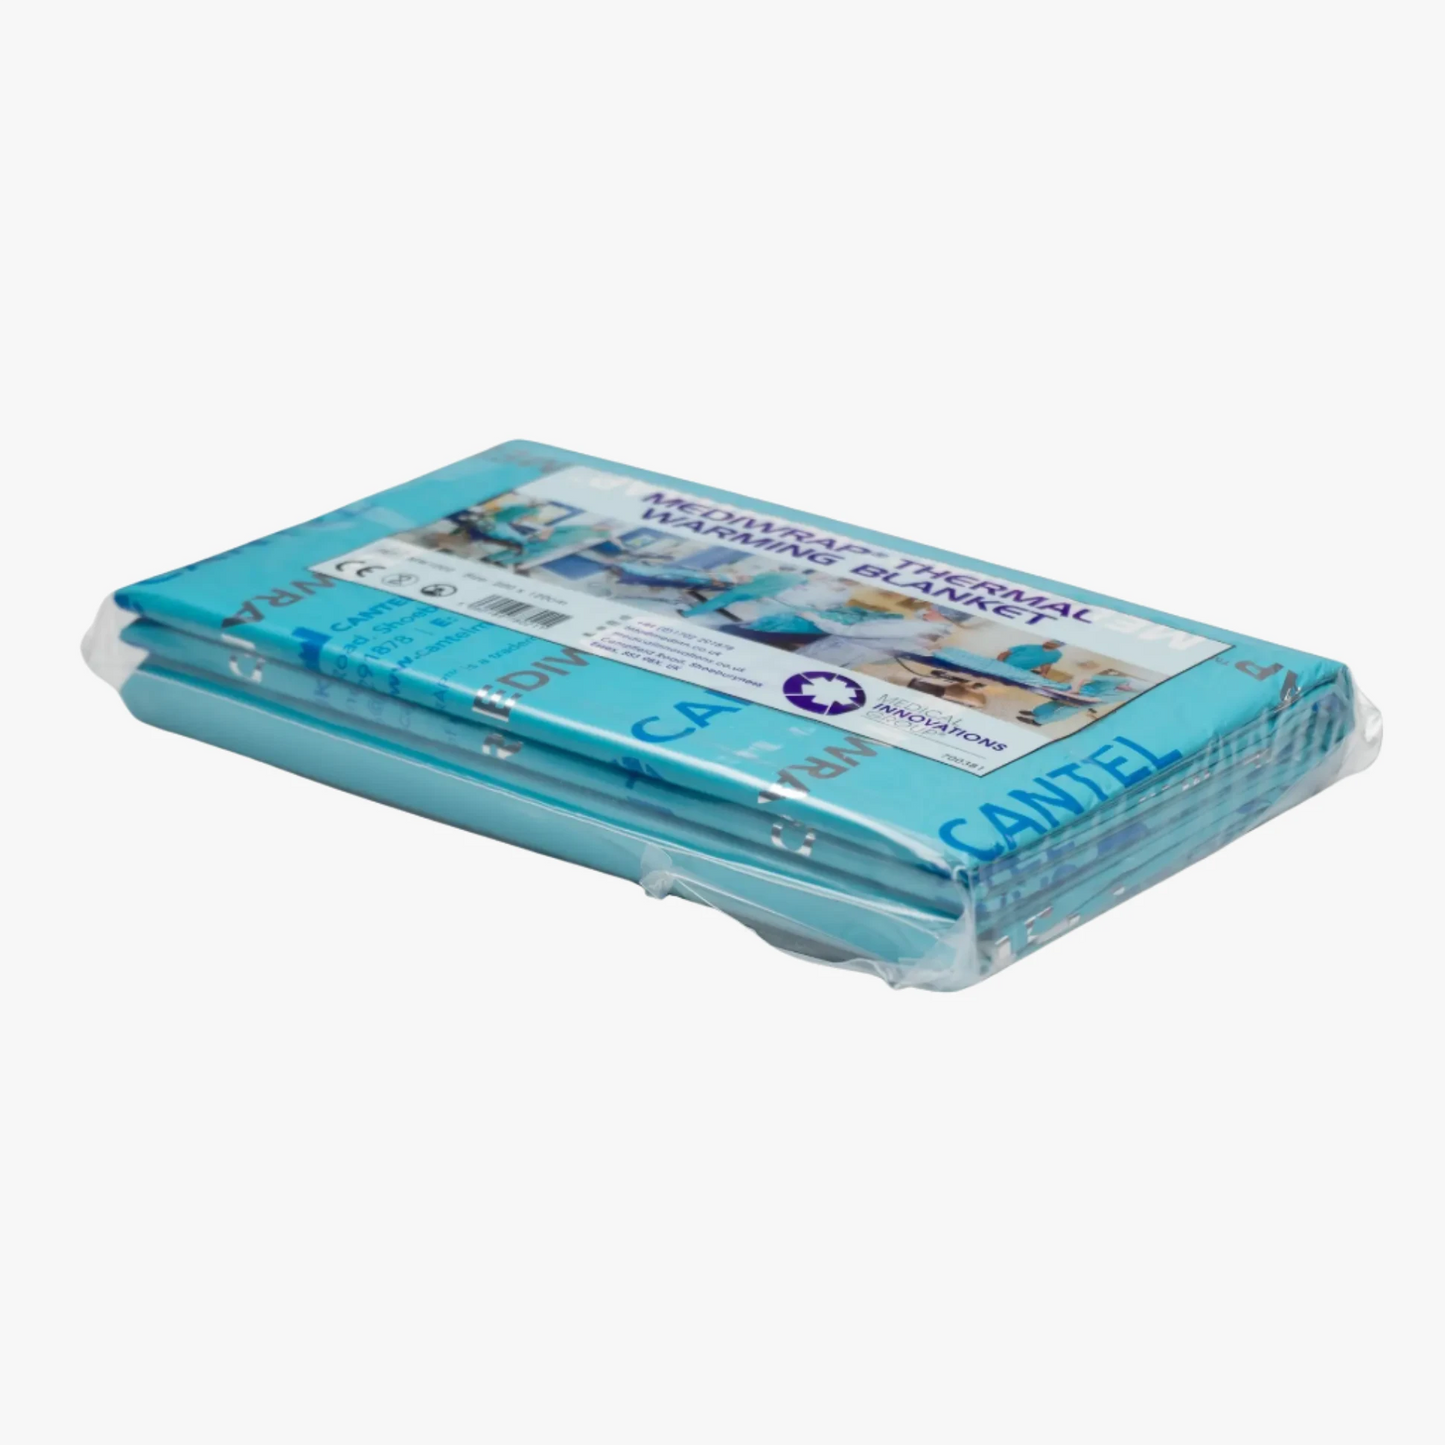 Räddningsfilt Mediwrap – Thermal Warming Blanket – 200x120cm